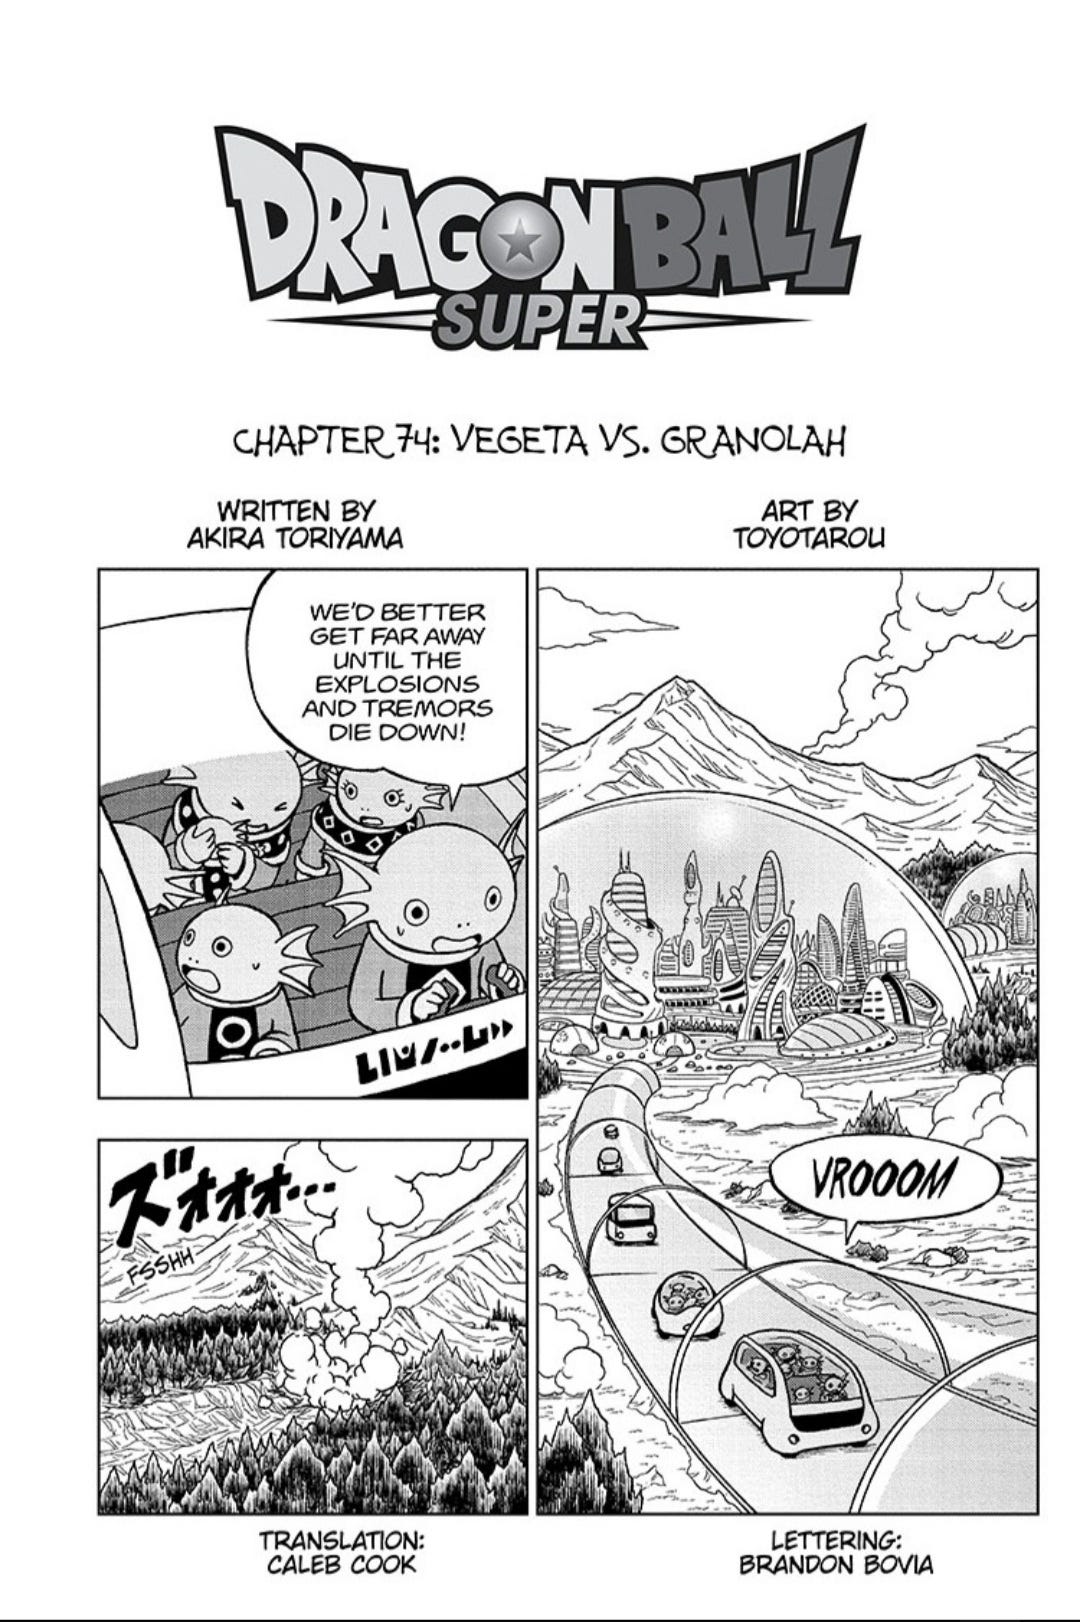 Return match for Super Vegeta - Chapter 84, Page 1924 - DBMultiverse